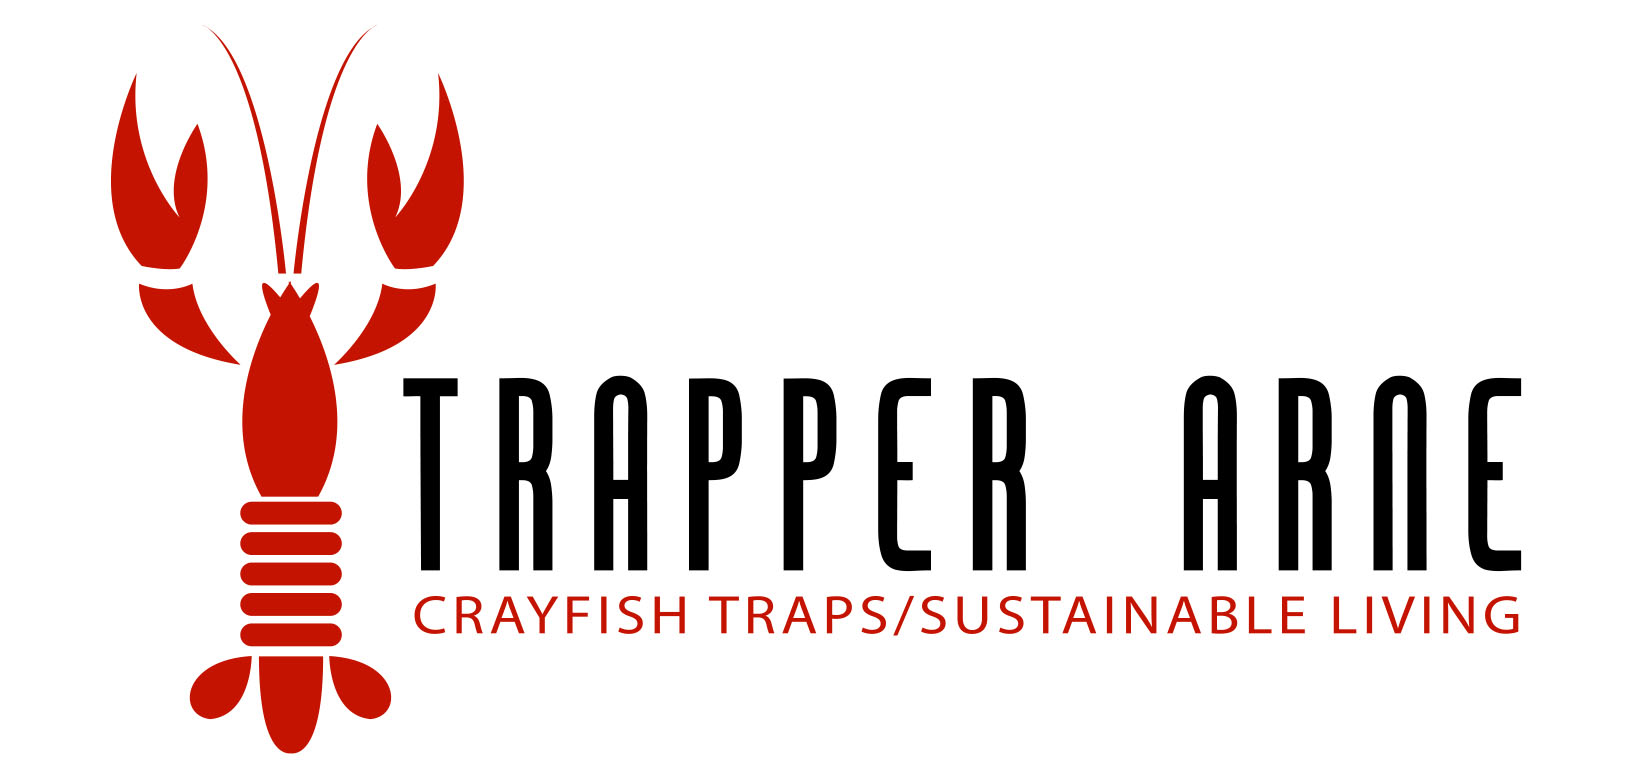 Crawfish Trap by Jérémy Reeder